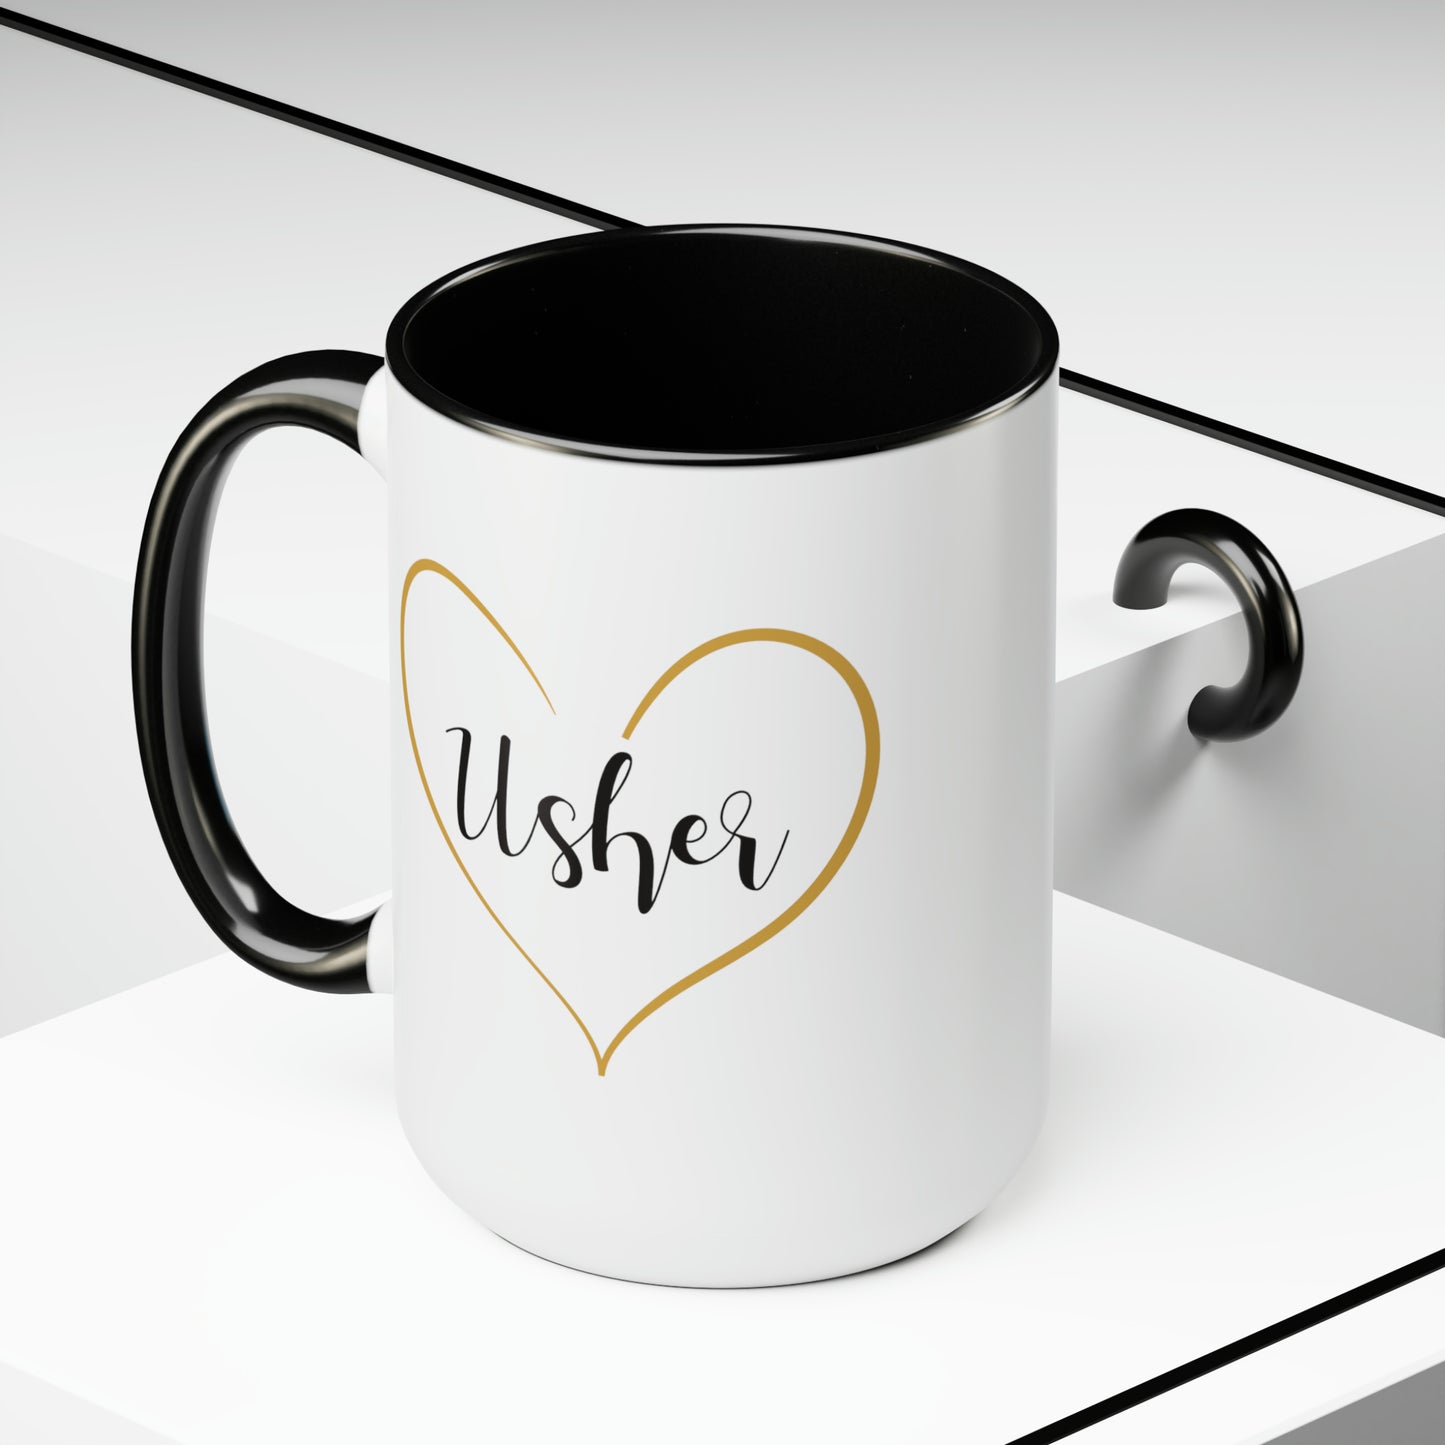 Usher Coffee Mug - Double Sided Black Accent Ceramic 15oz by TheGlassyLass.com